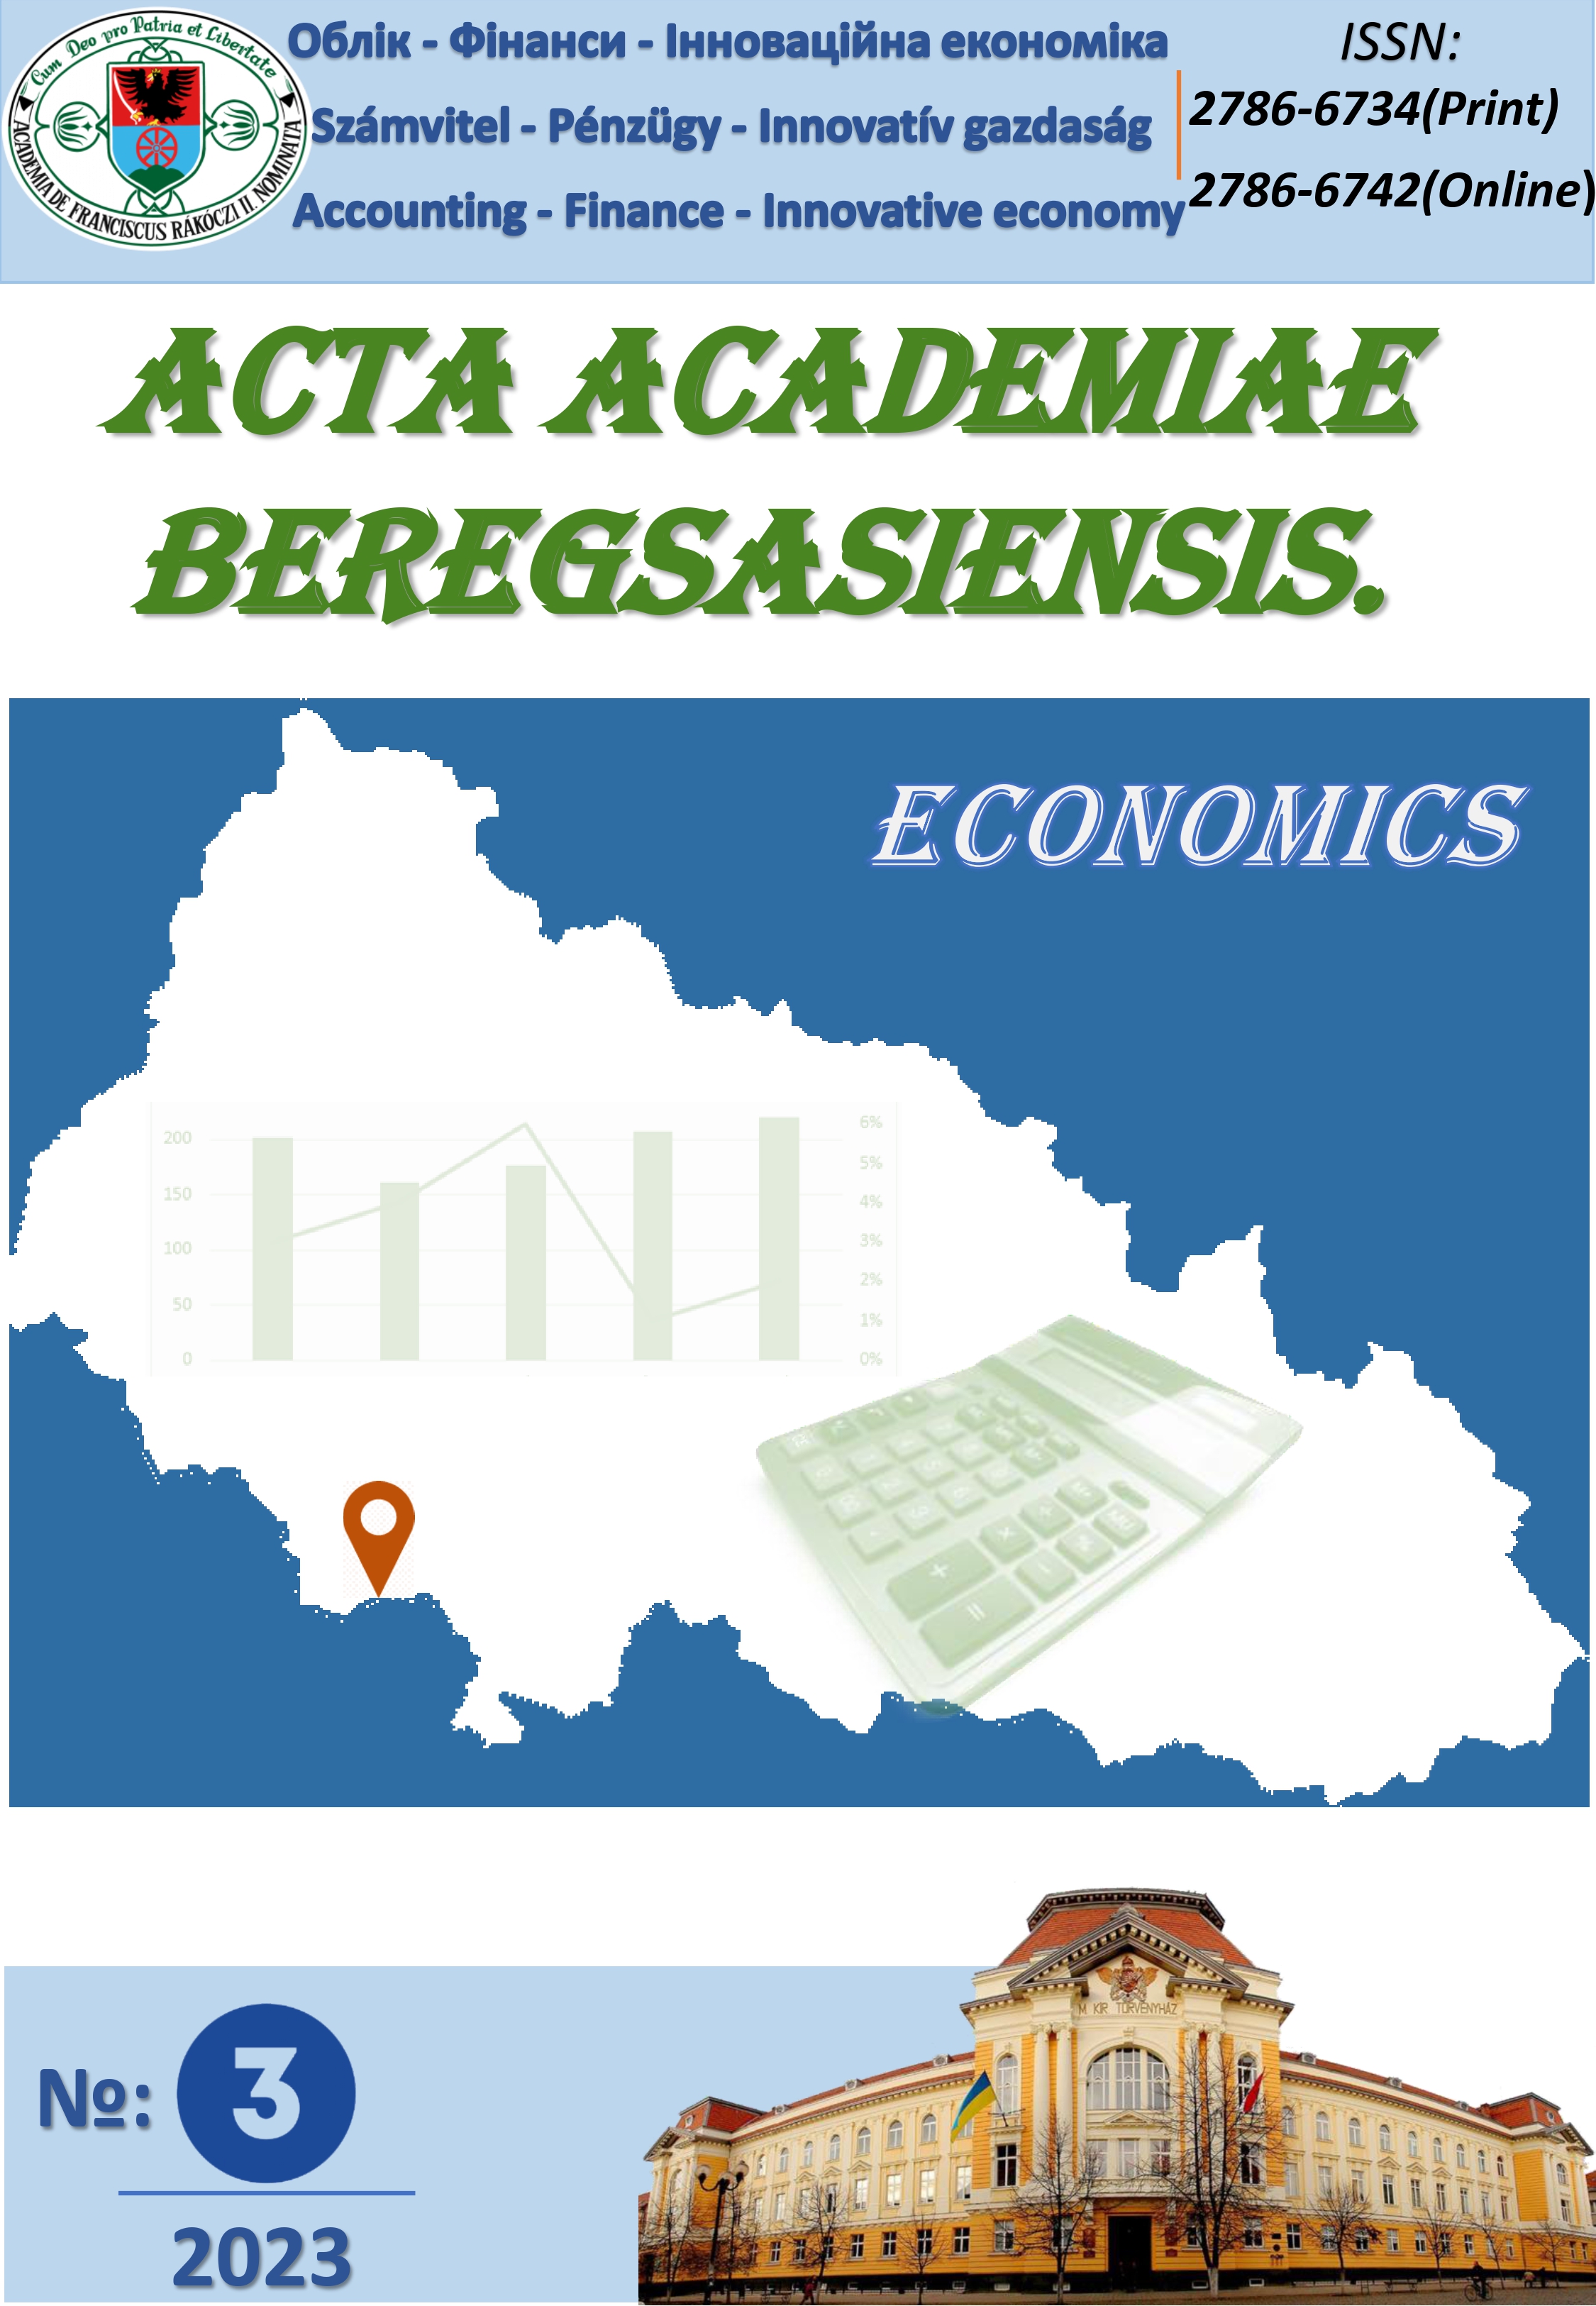 					View No. 3 (2023): Acta Academiae Beregsasiensis. Economics
				